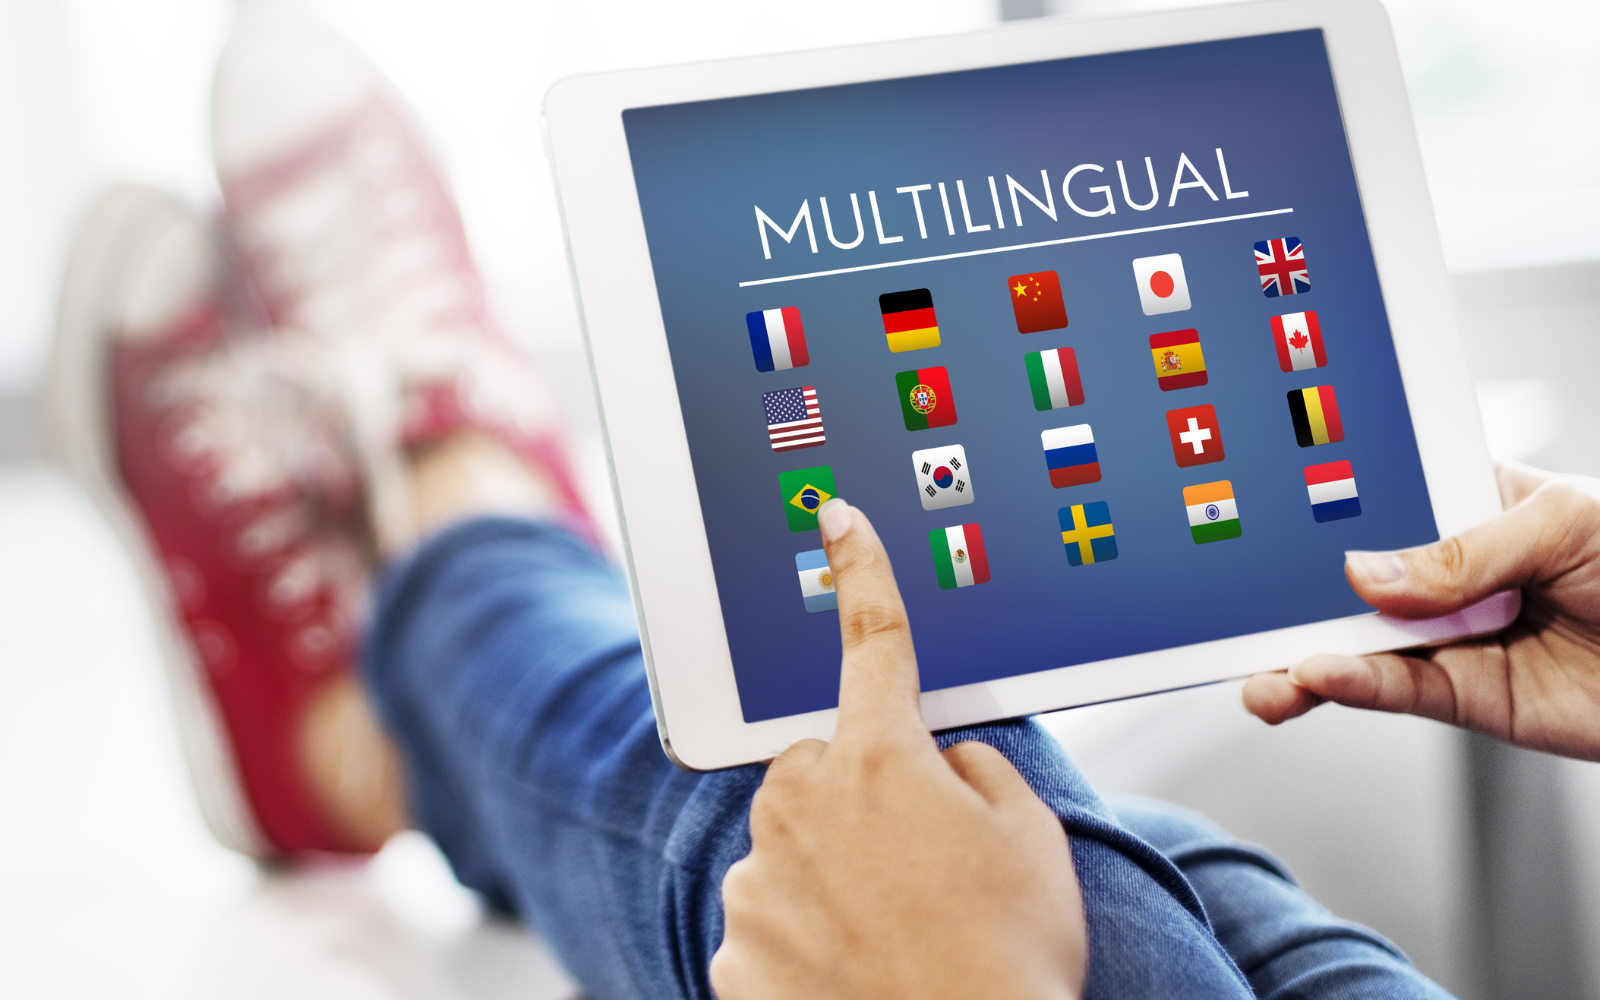 4 Technical SEO Tips For Multilingual Websites via @sejournal, @sergebezborodov